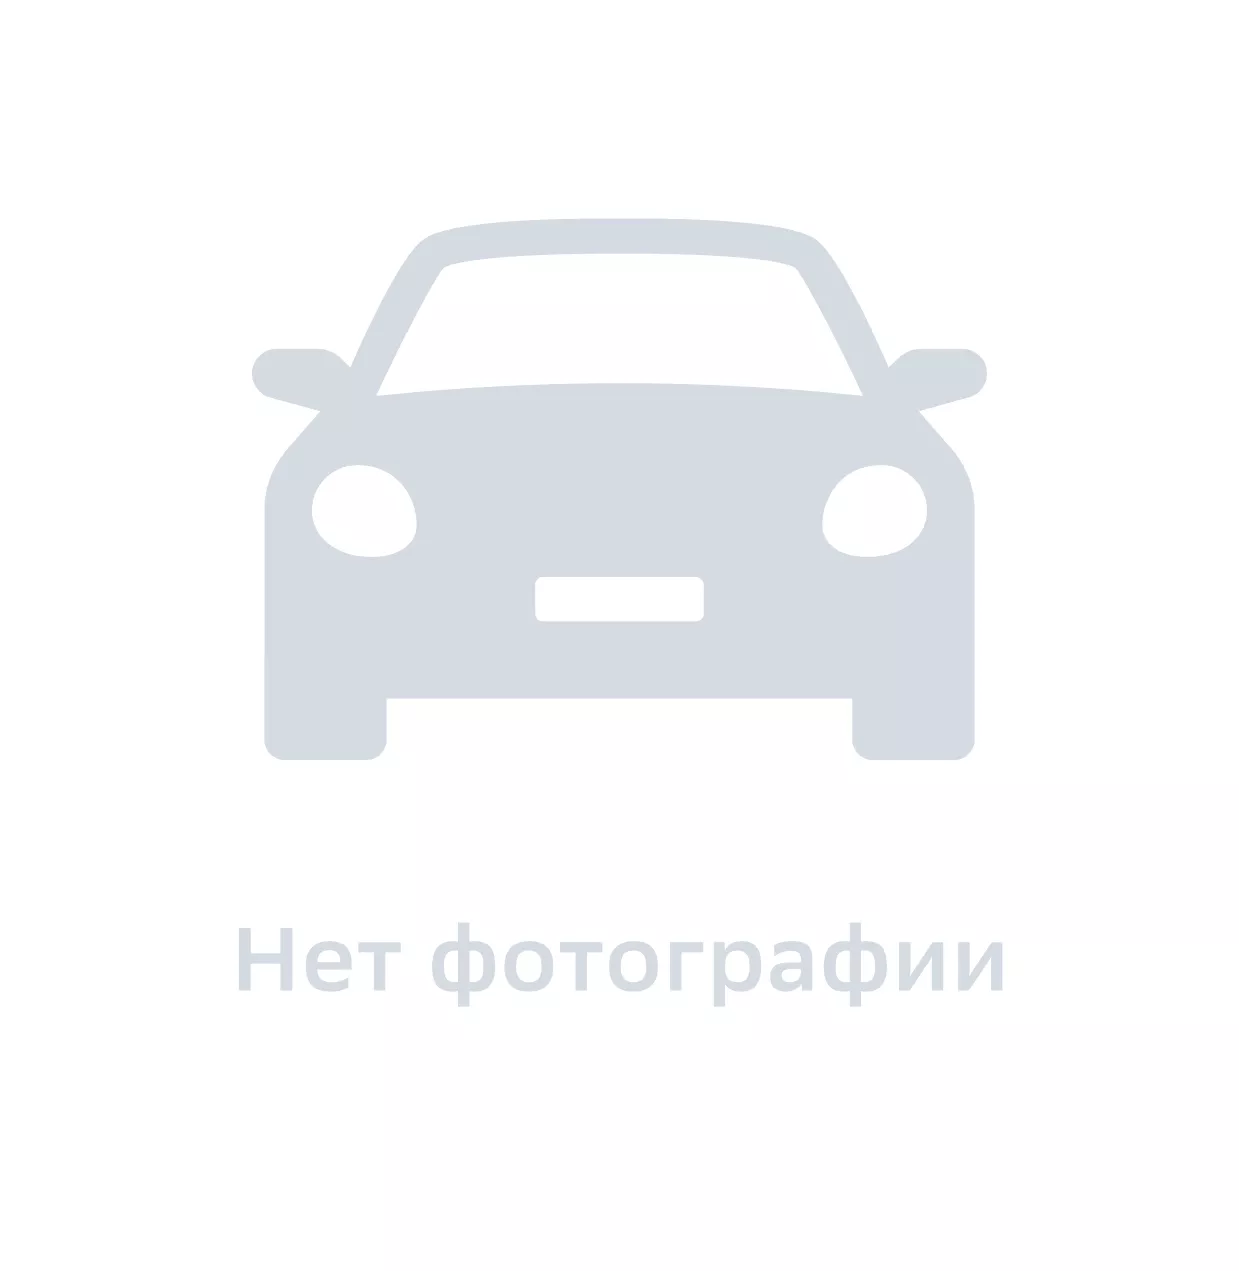 Колпак колеса, Hyundai-KIA, арт. 5296028900, цена за 1 шт.